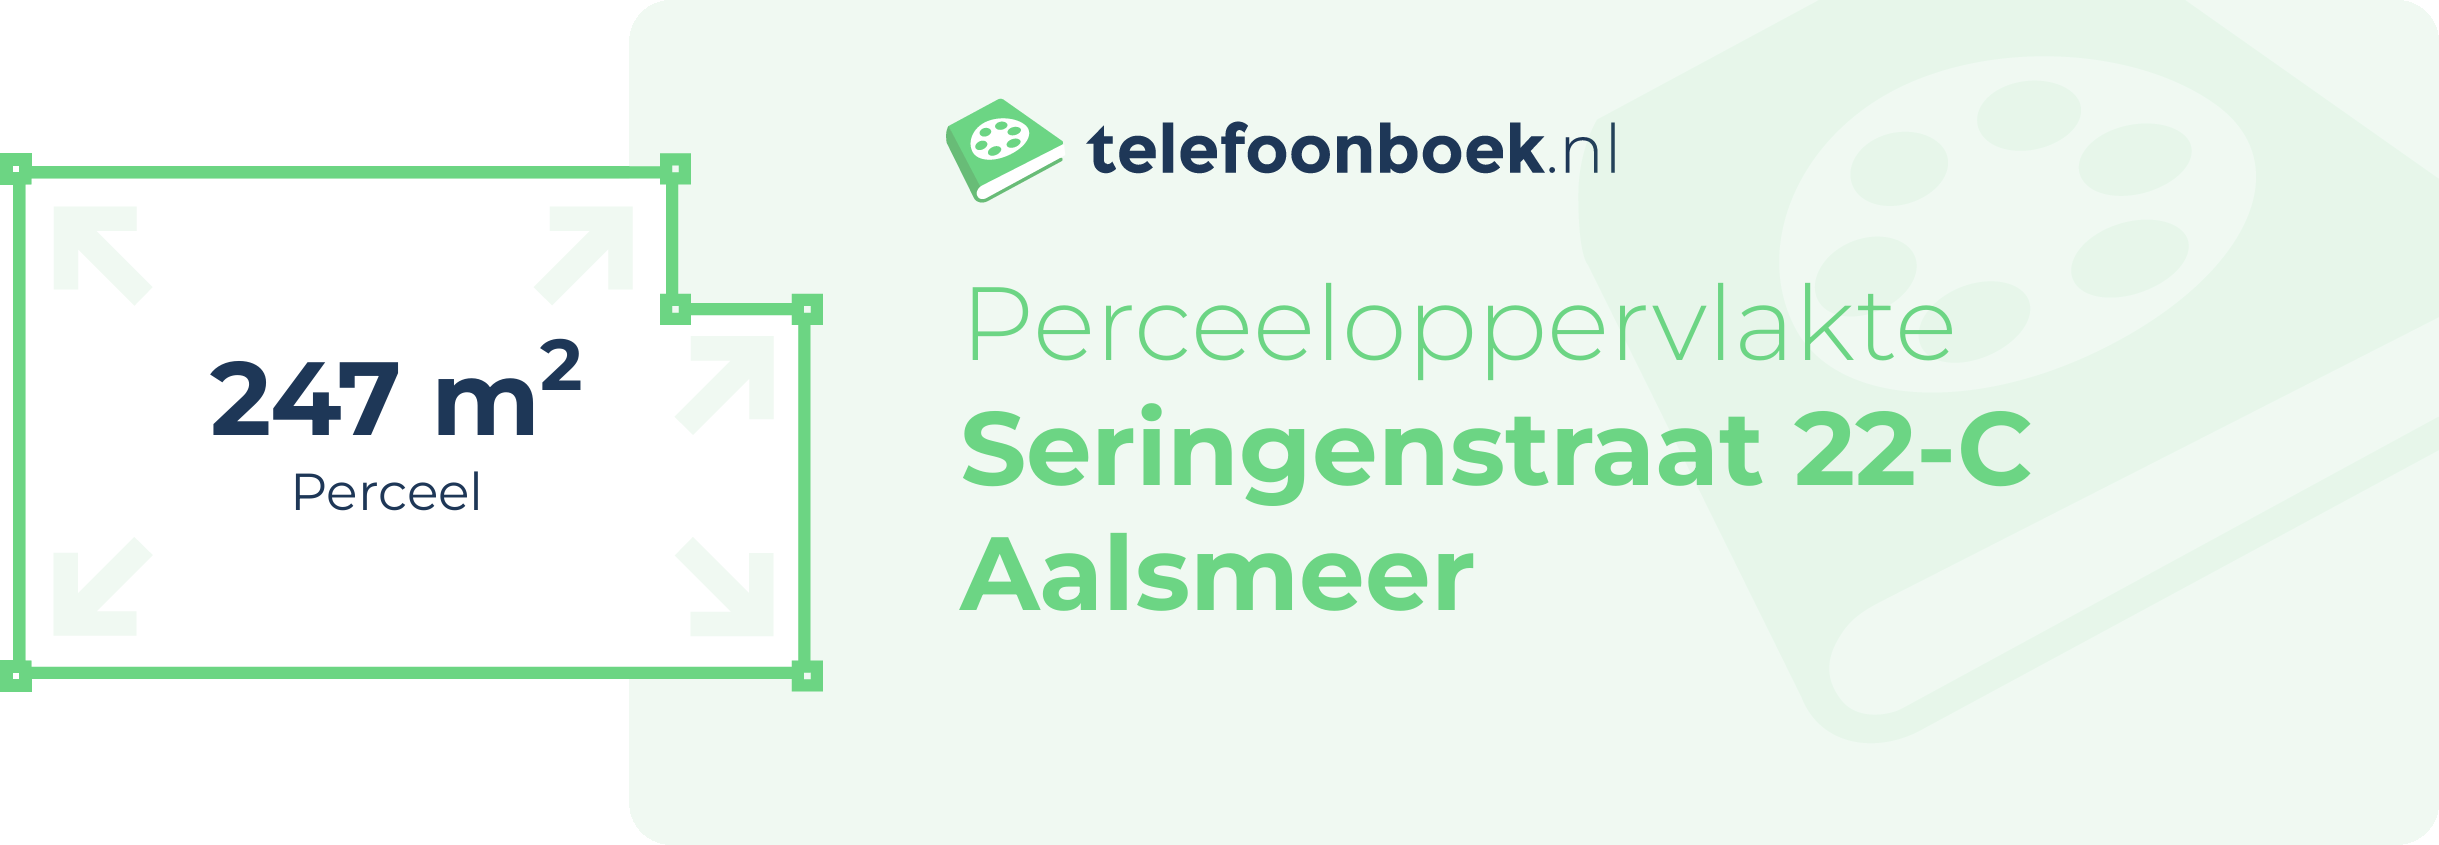 Perceeloppervlakte Seringenstraat 22-C Aalsmeer